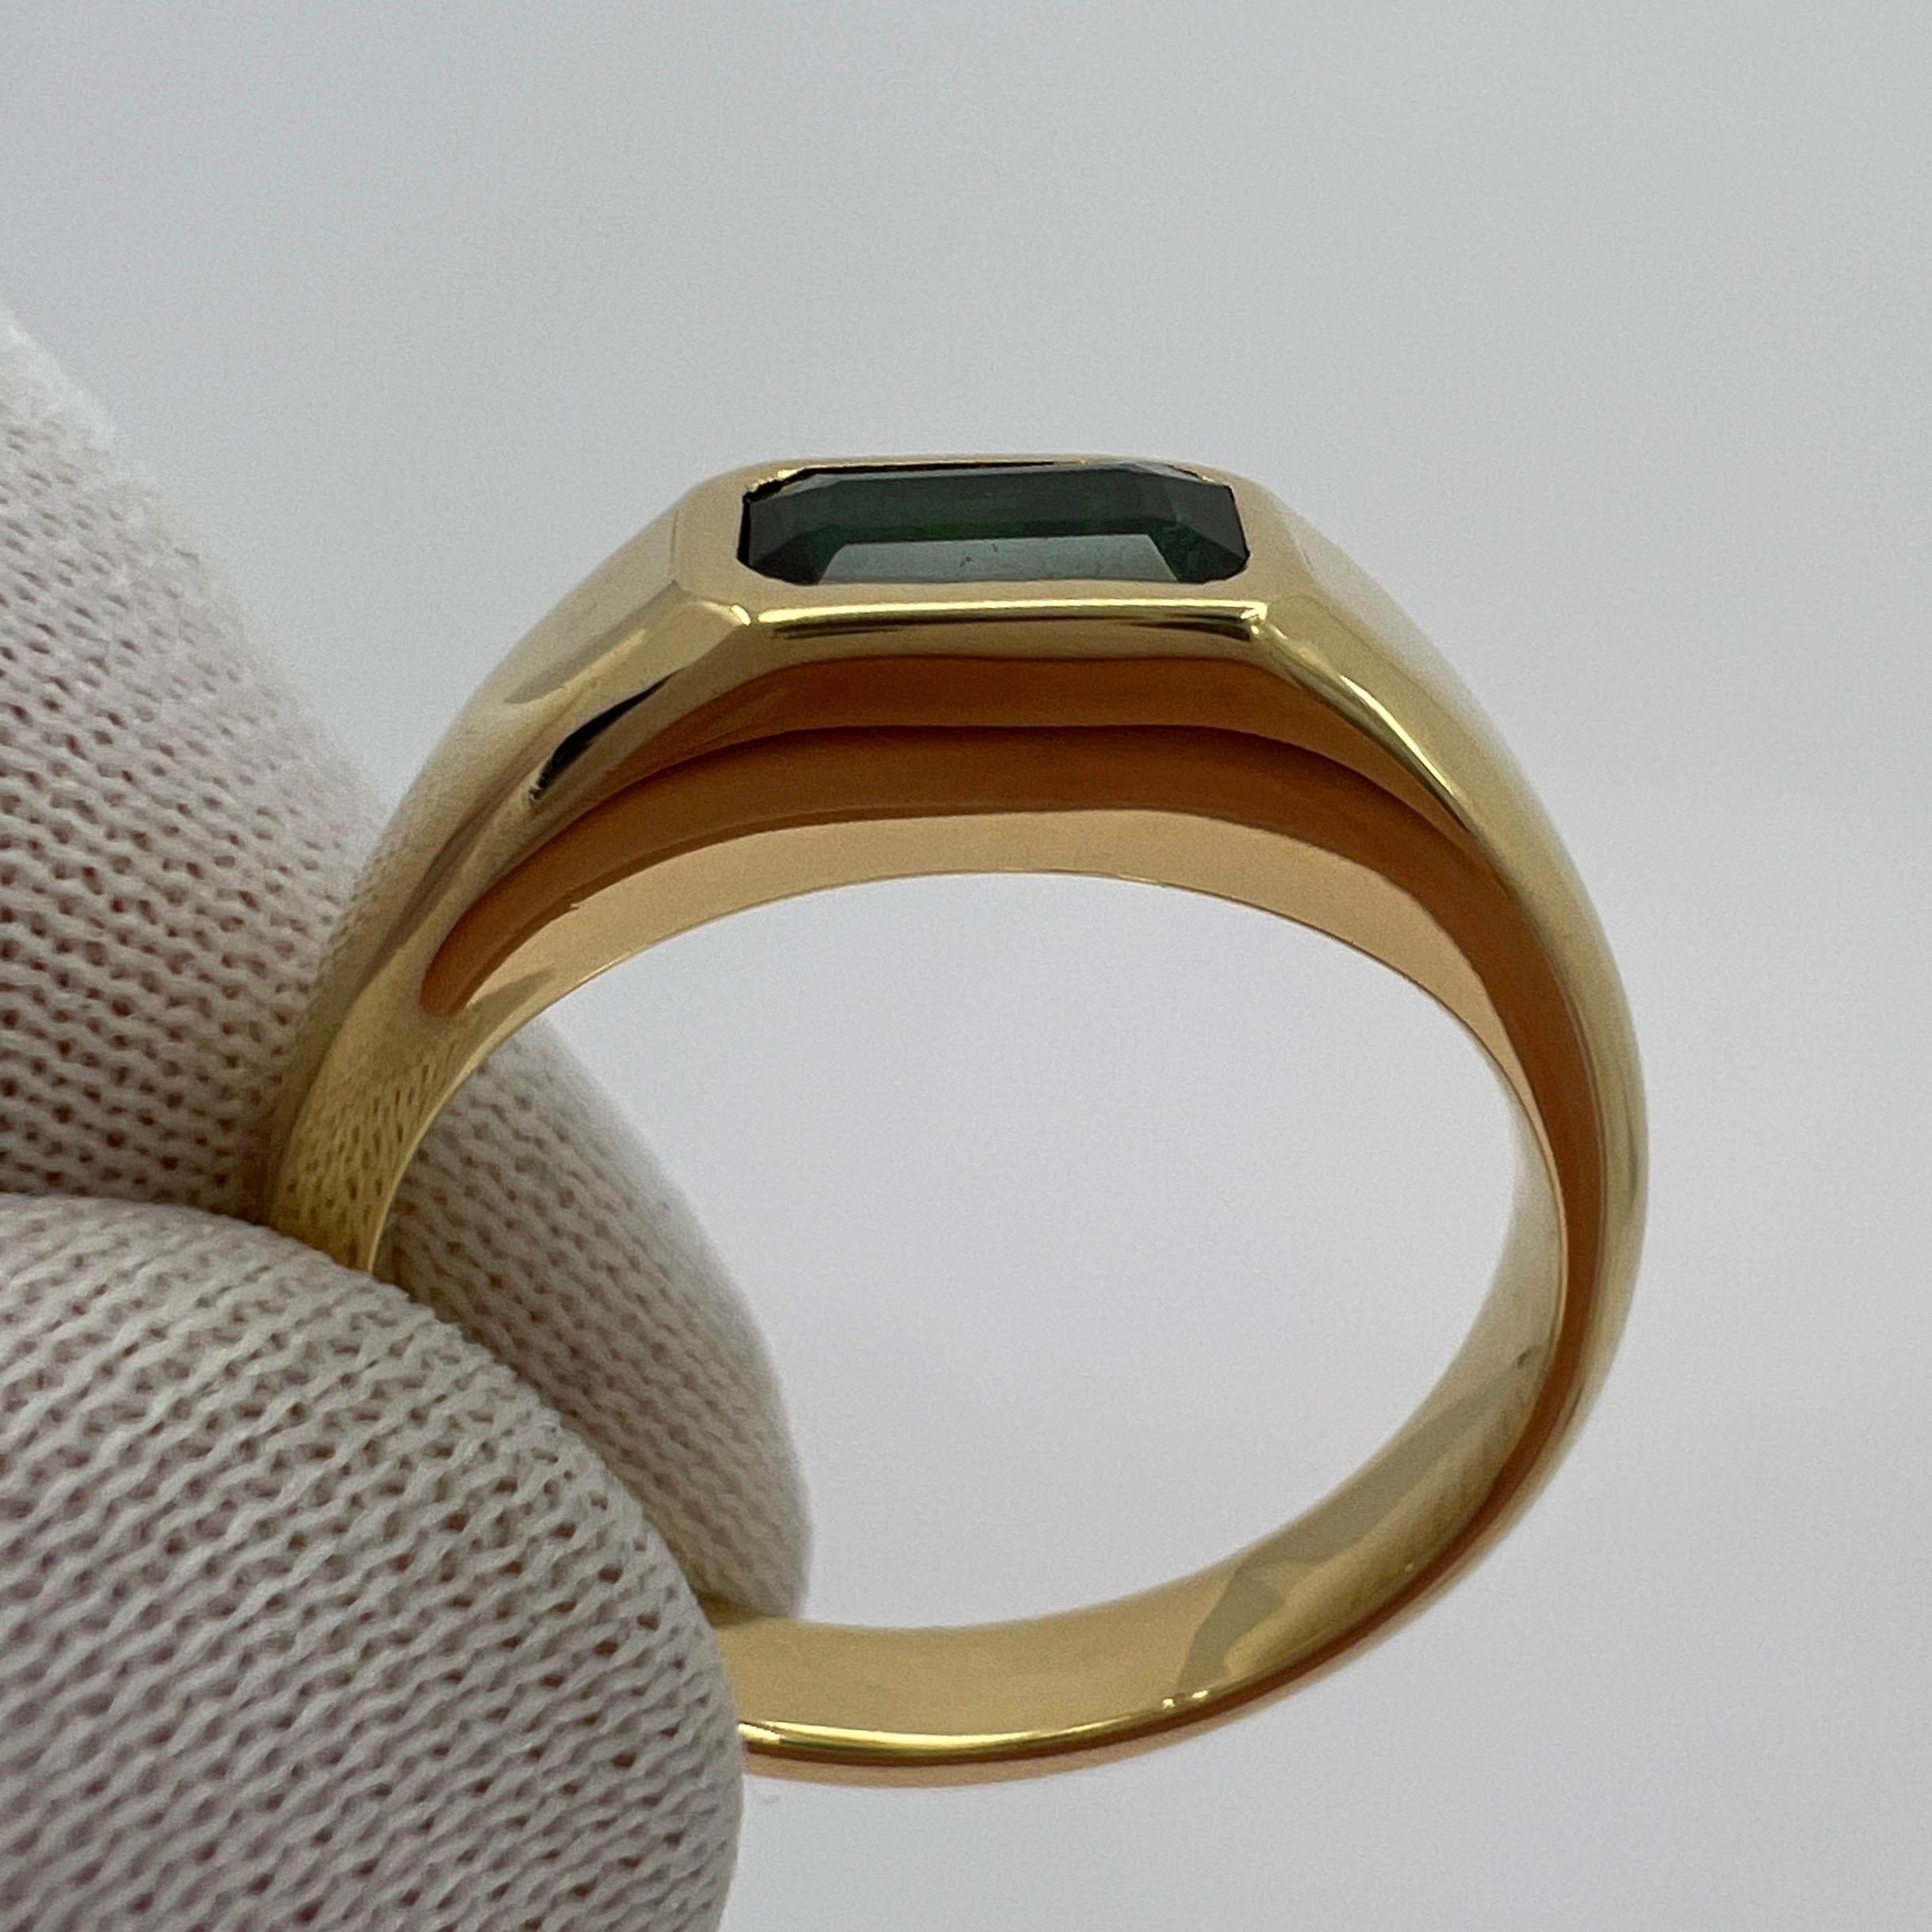 ITSIT Vivid Green Tsavorite Garnet 0.75 Carat Emerald Cut 18k Yellow Gold Ring For Sale 6